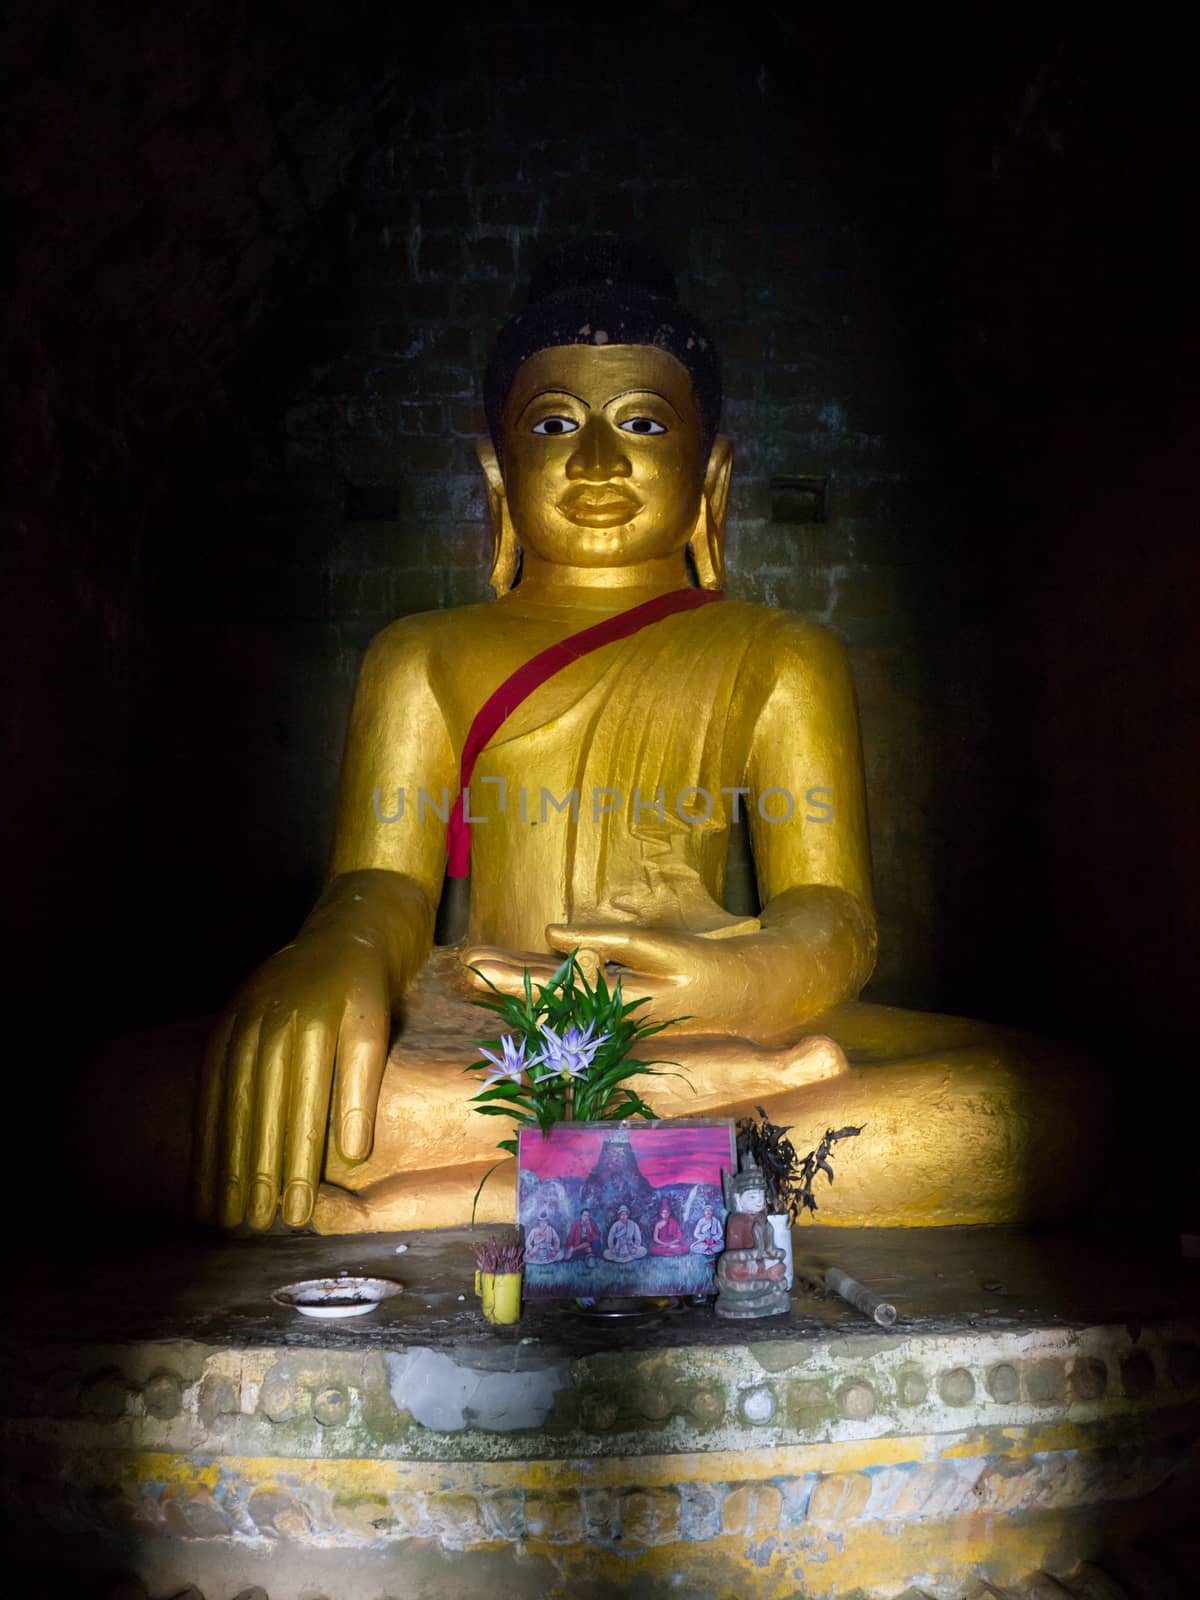 Buddha image in dark krypt in Mrauk U, Rakhine State in Myanmar.